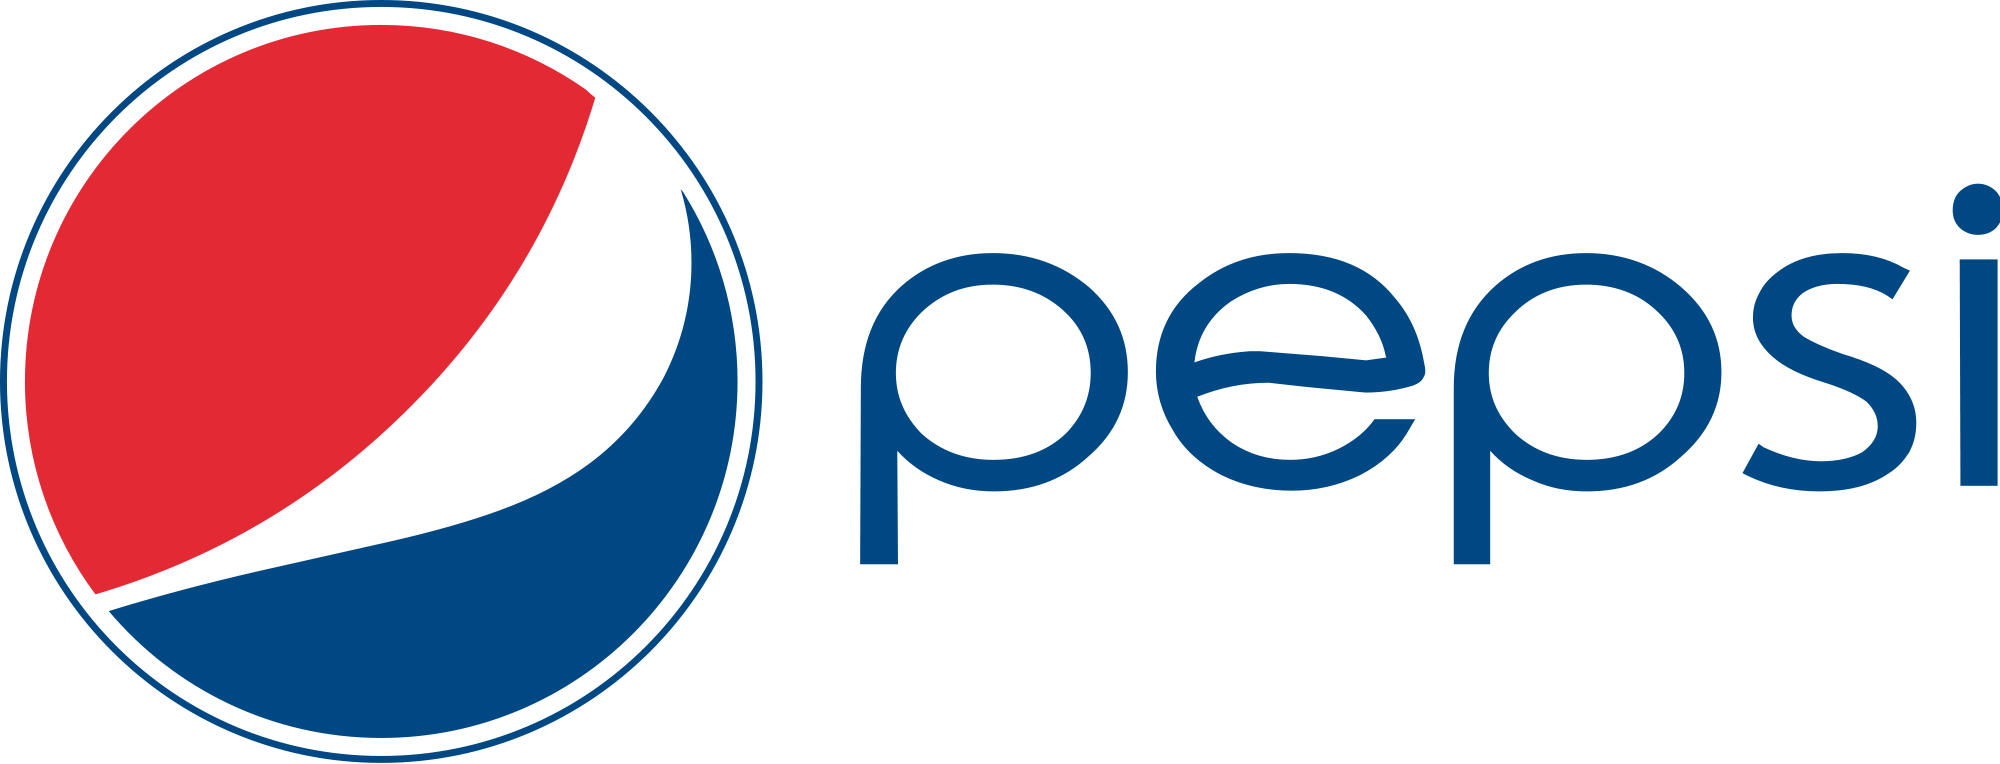 2000px-Pepsi_logo_2008.svg